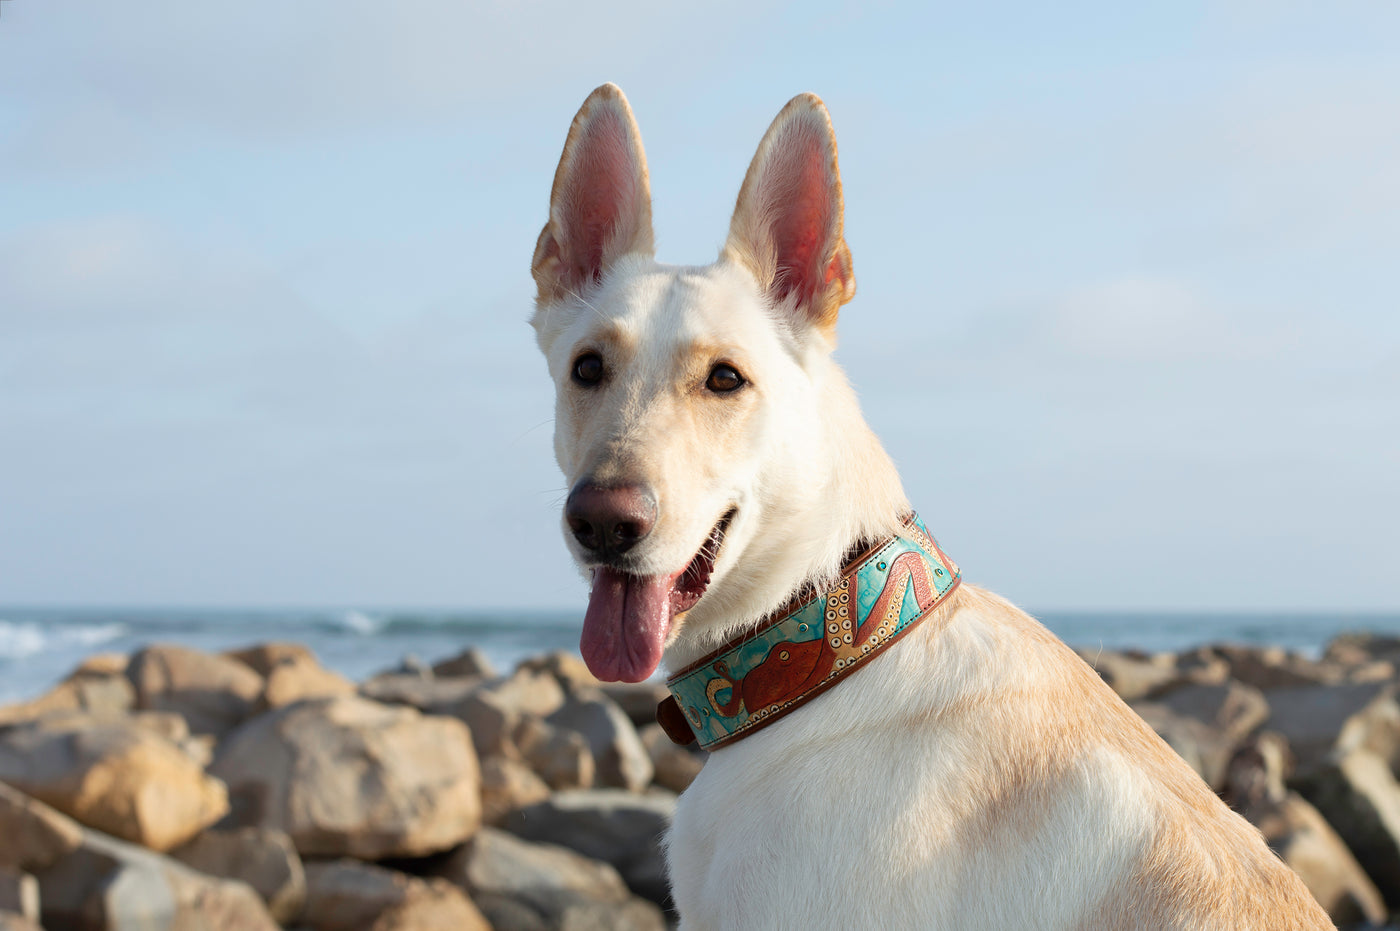 Coconut Leather Dog Collar – Ramona For You